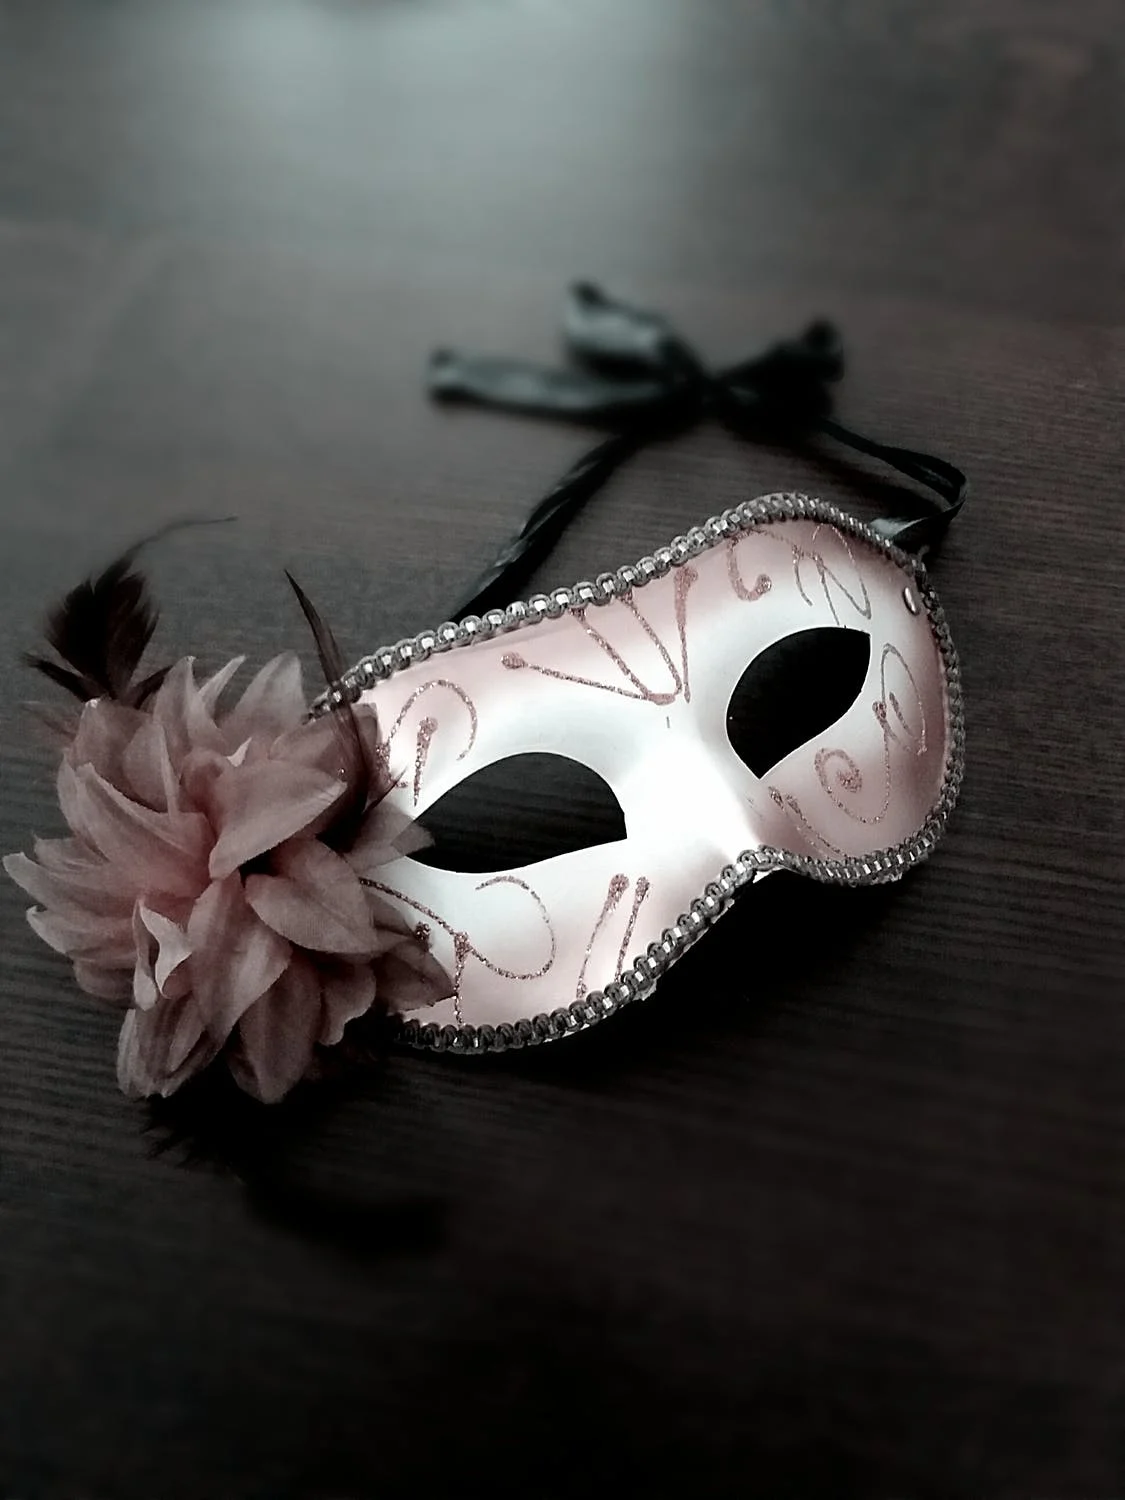 A white opera mask on a black table